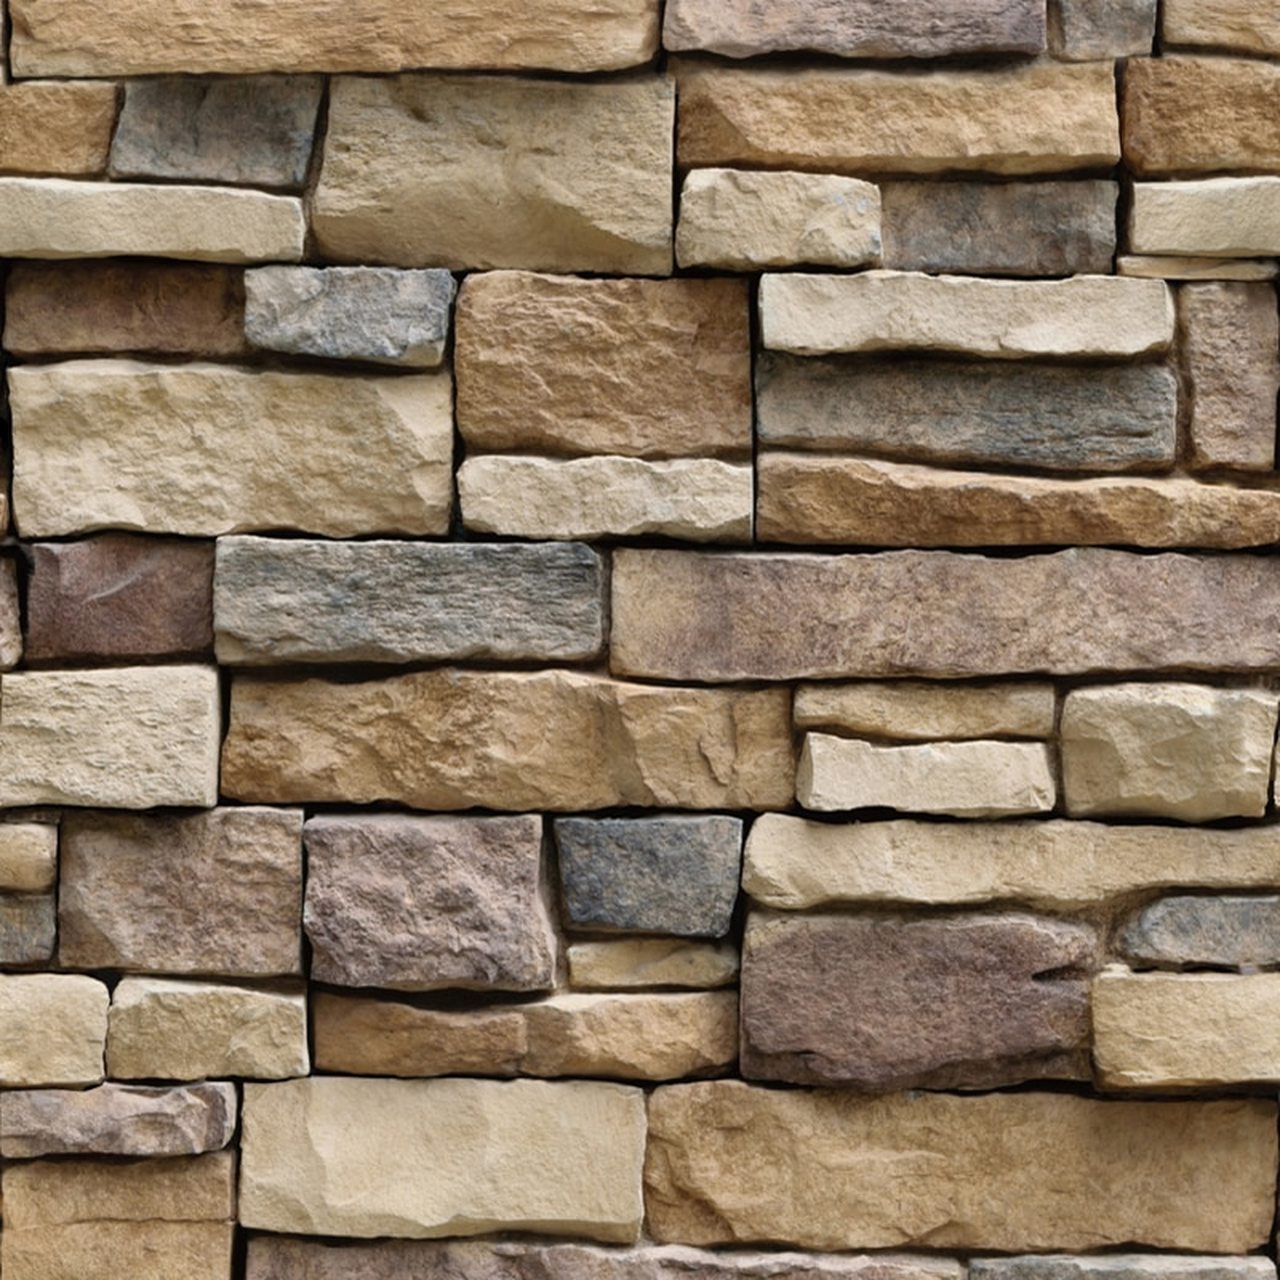 stone wallpaper,stone wall,wall,rock,brickwork,brick